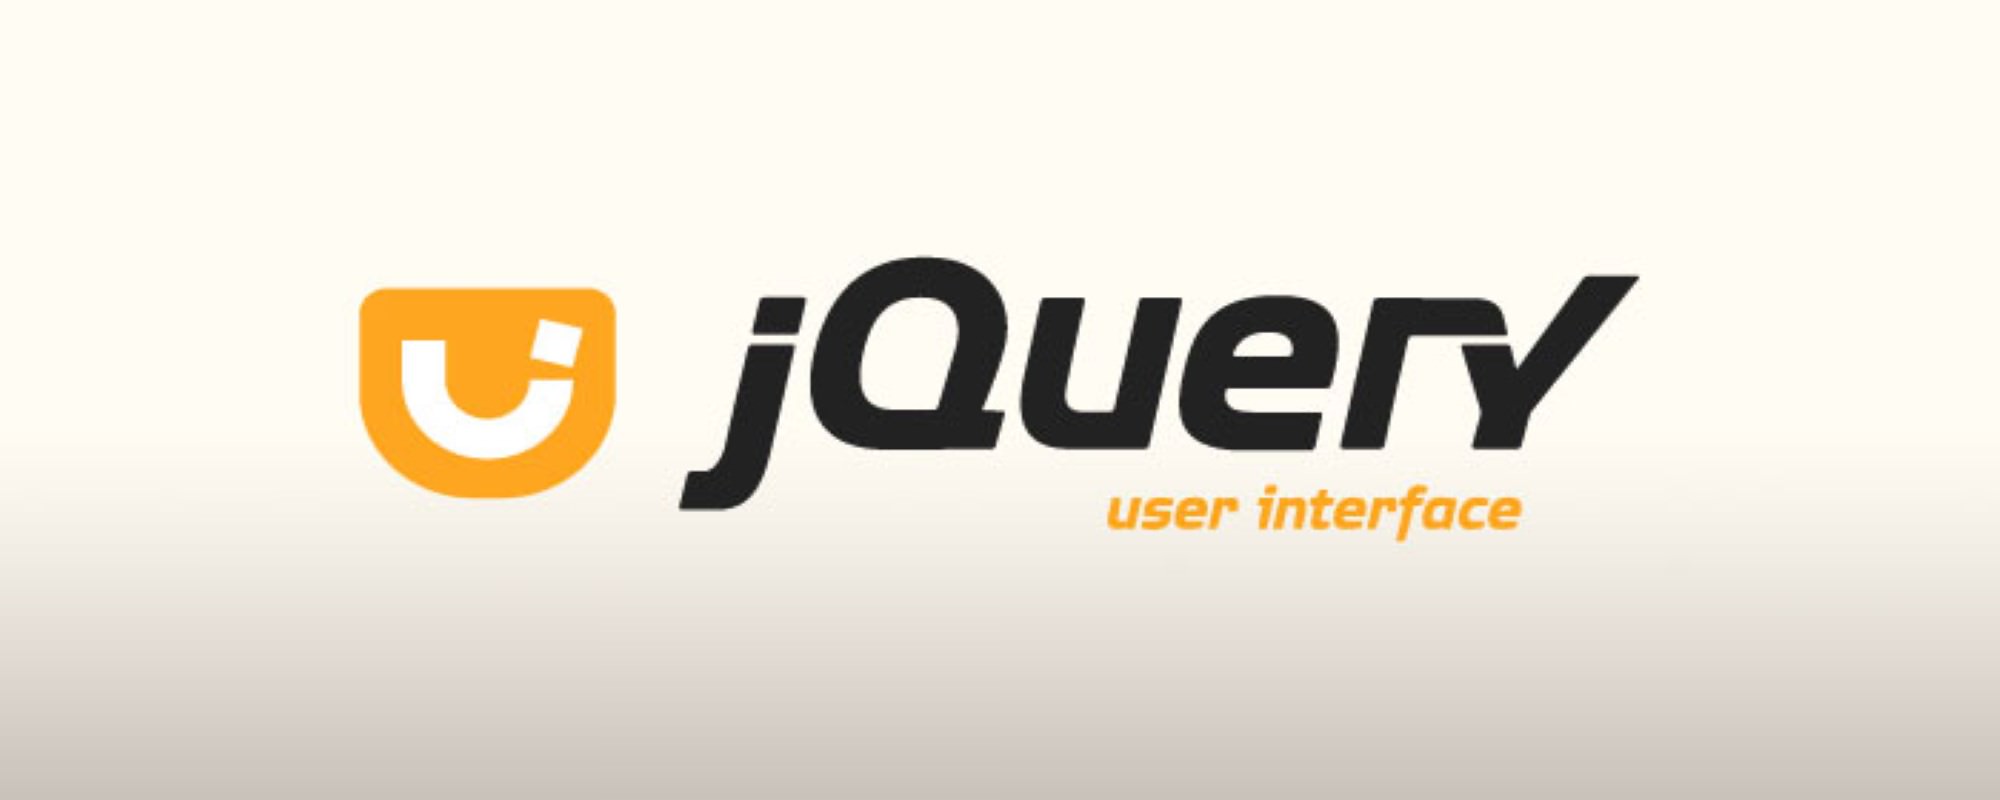 jQuery - User Interface